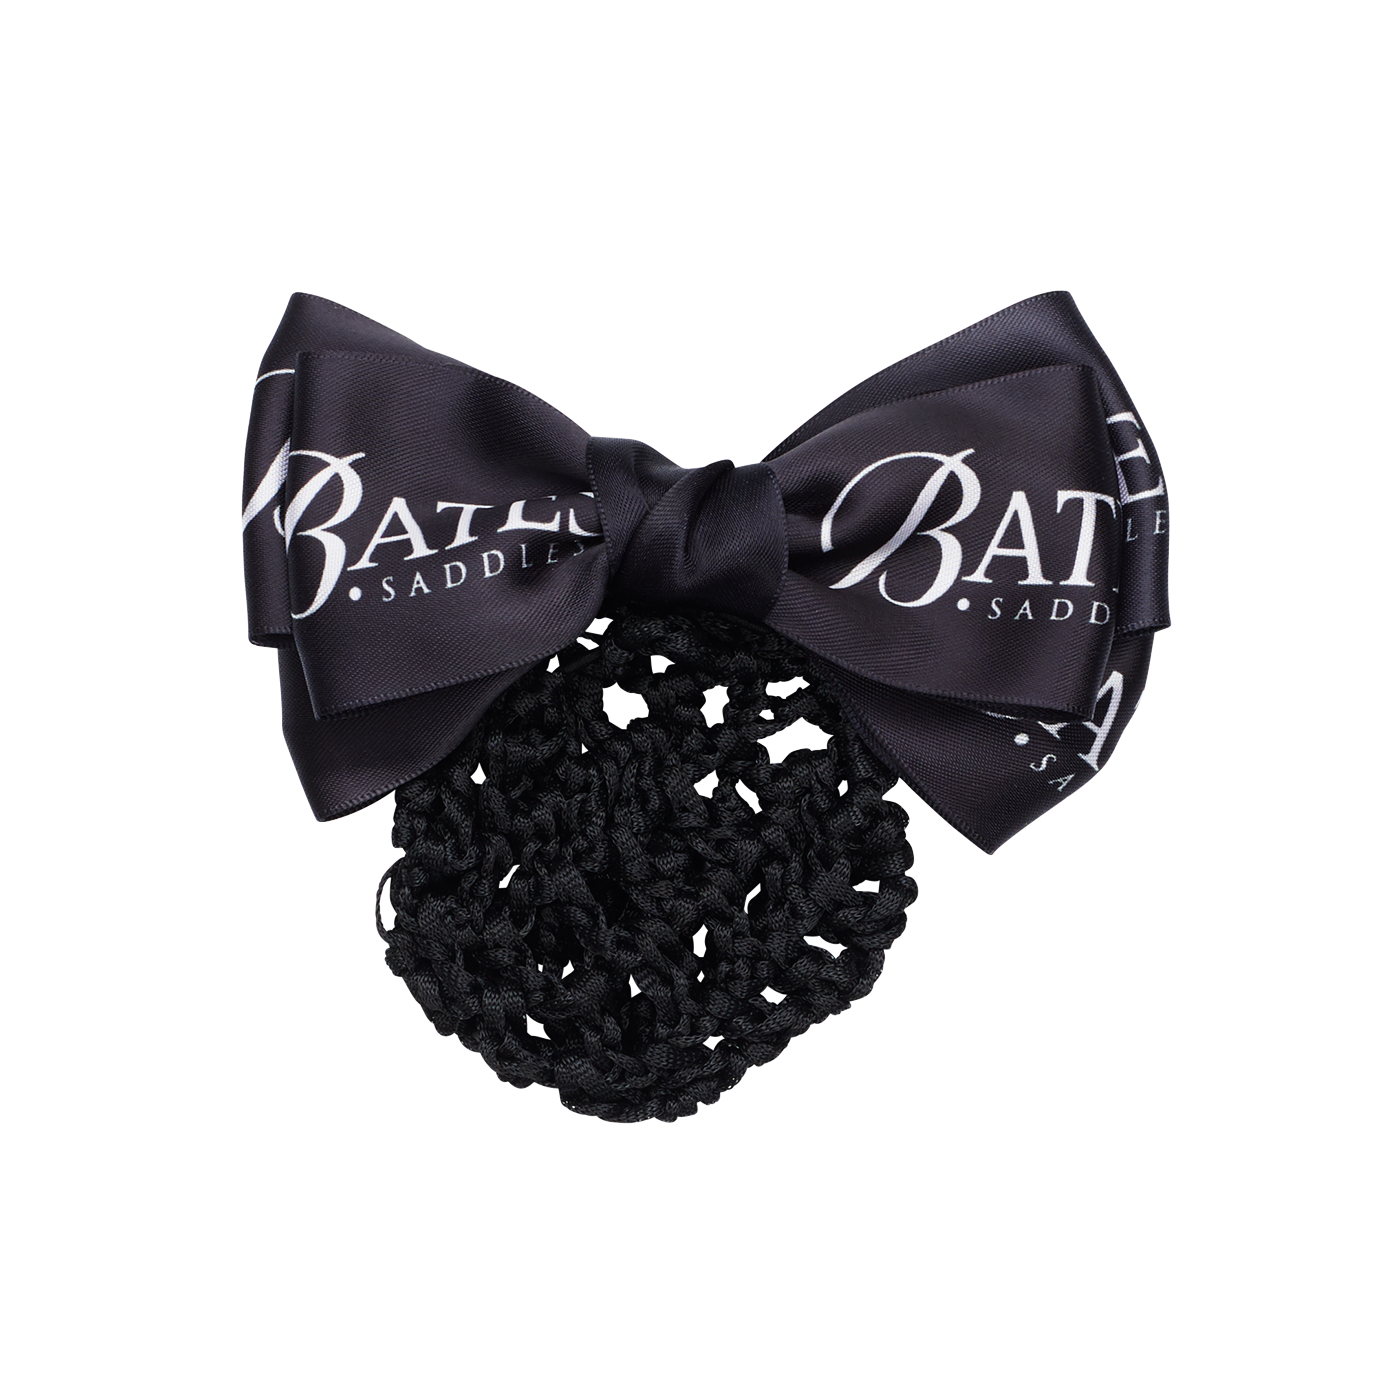 Bates Hair Net with Bow